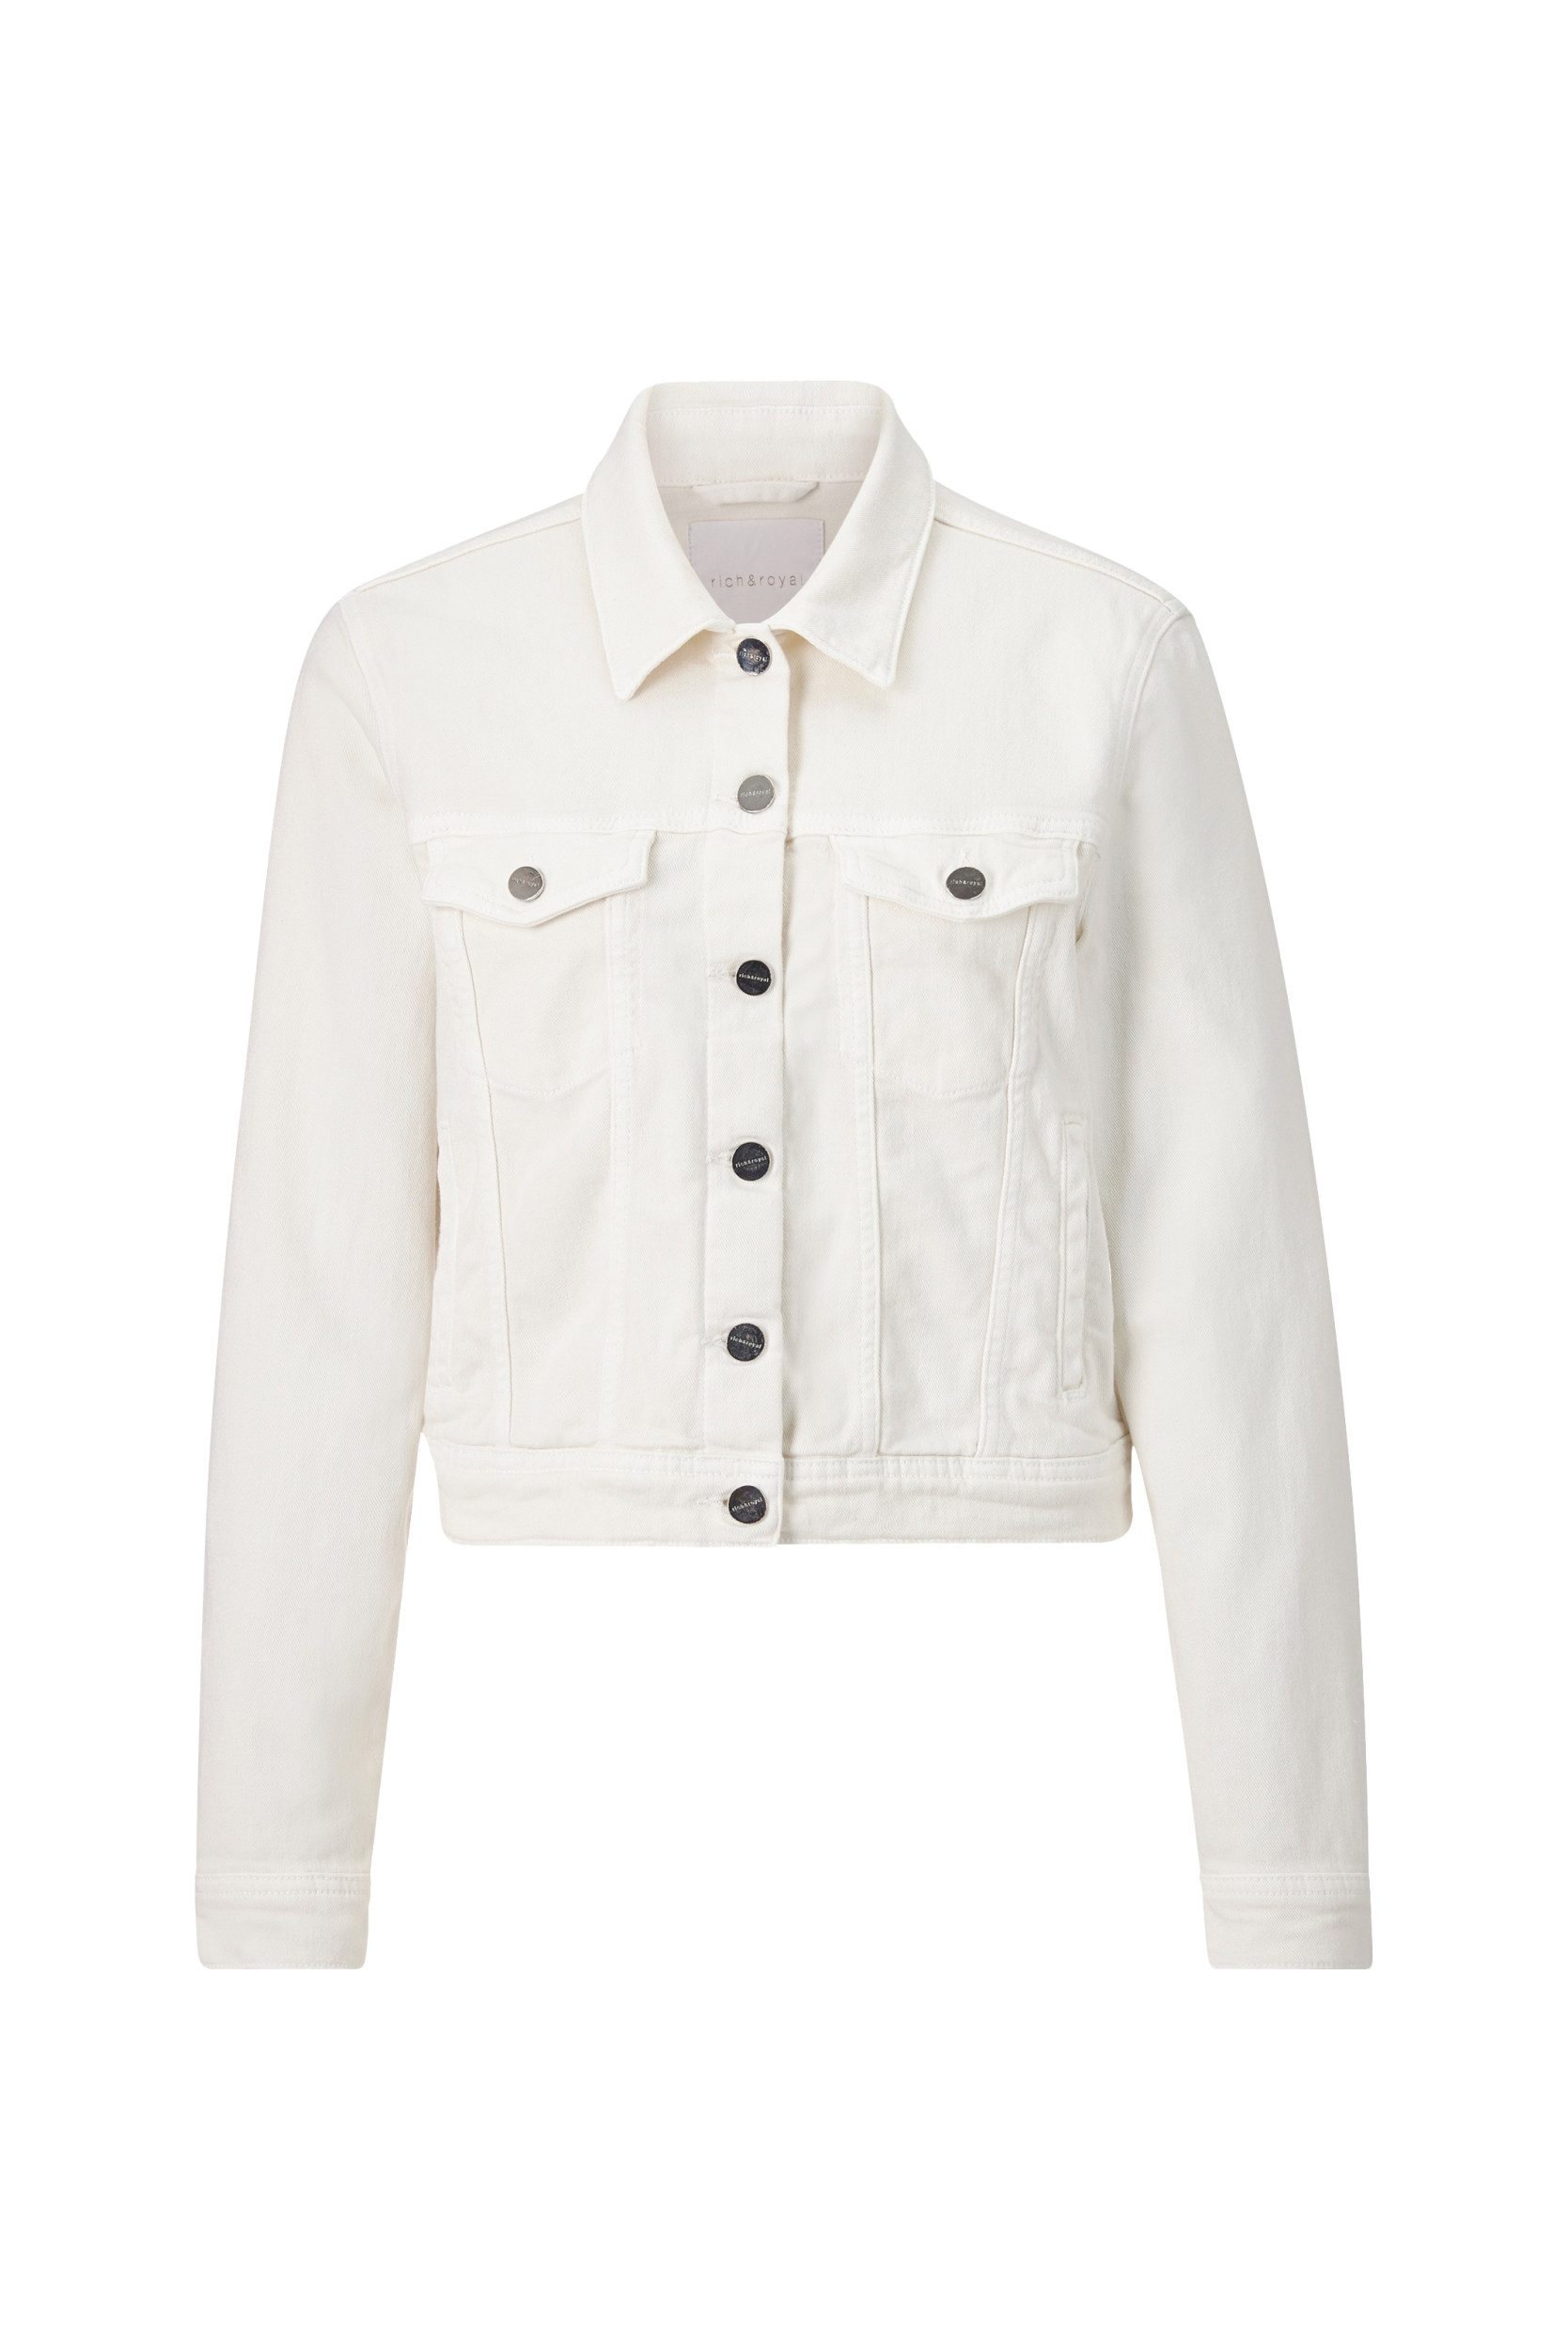 Rich & Royal Курткиblazer white denim jacket organic